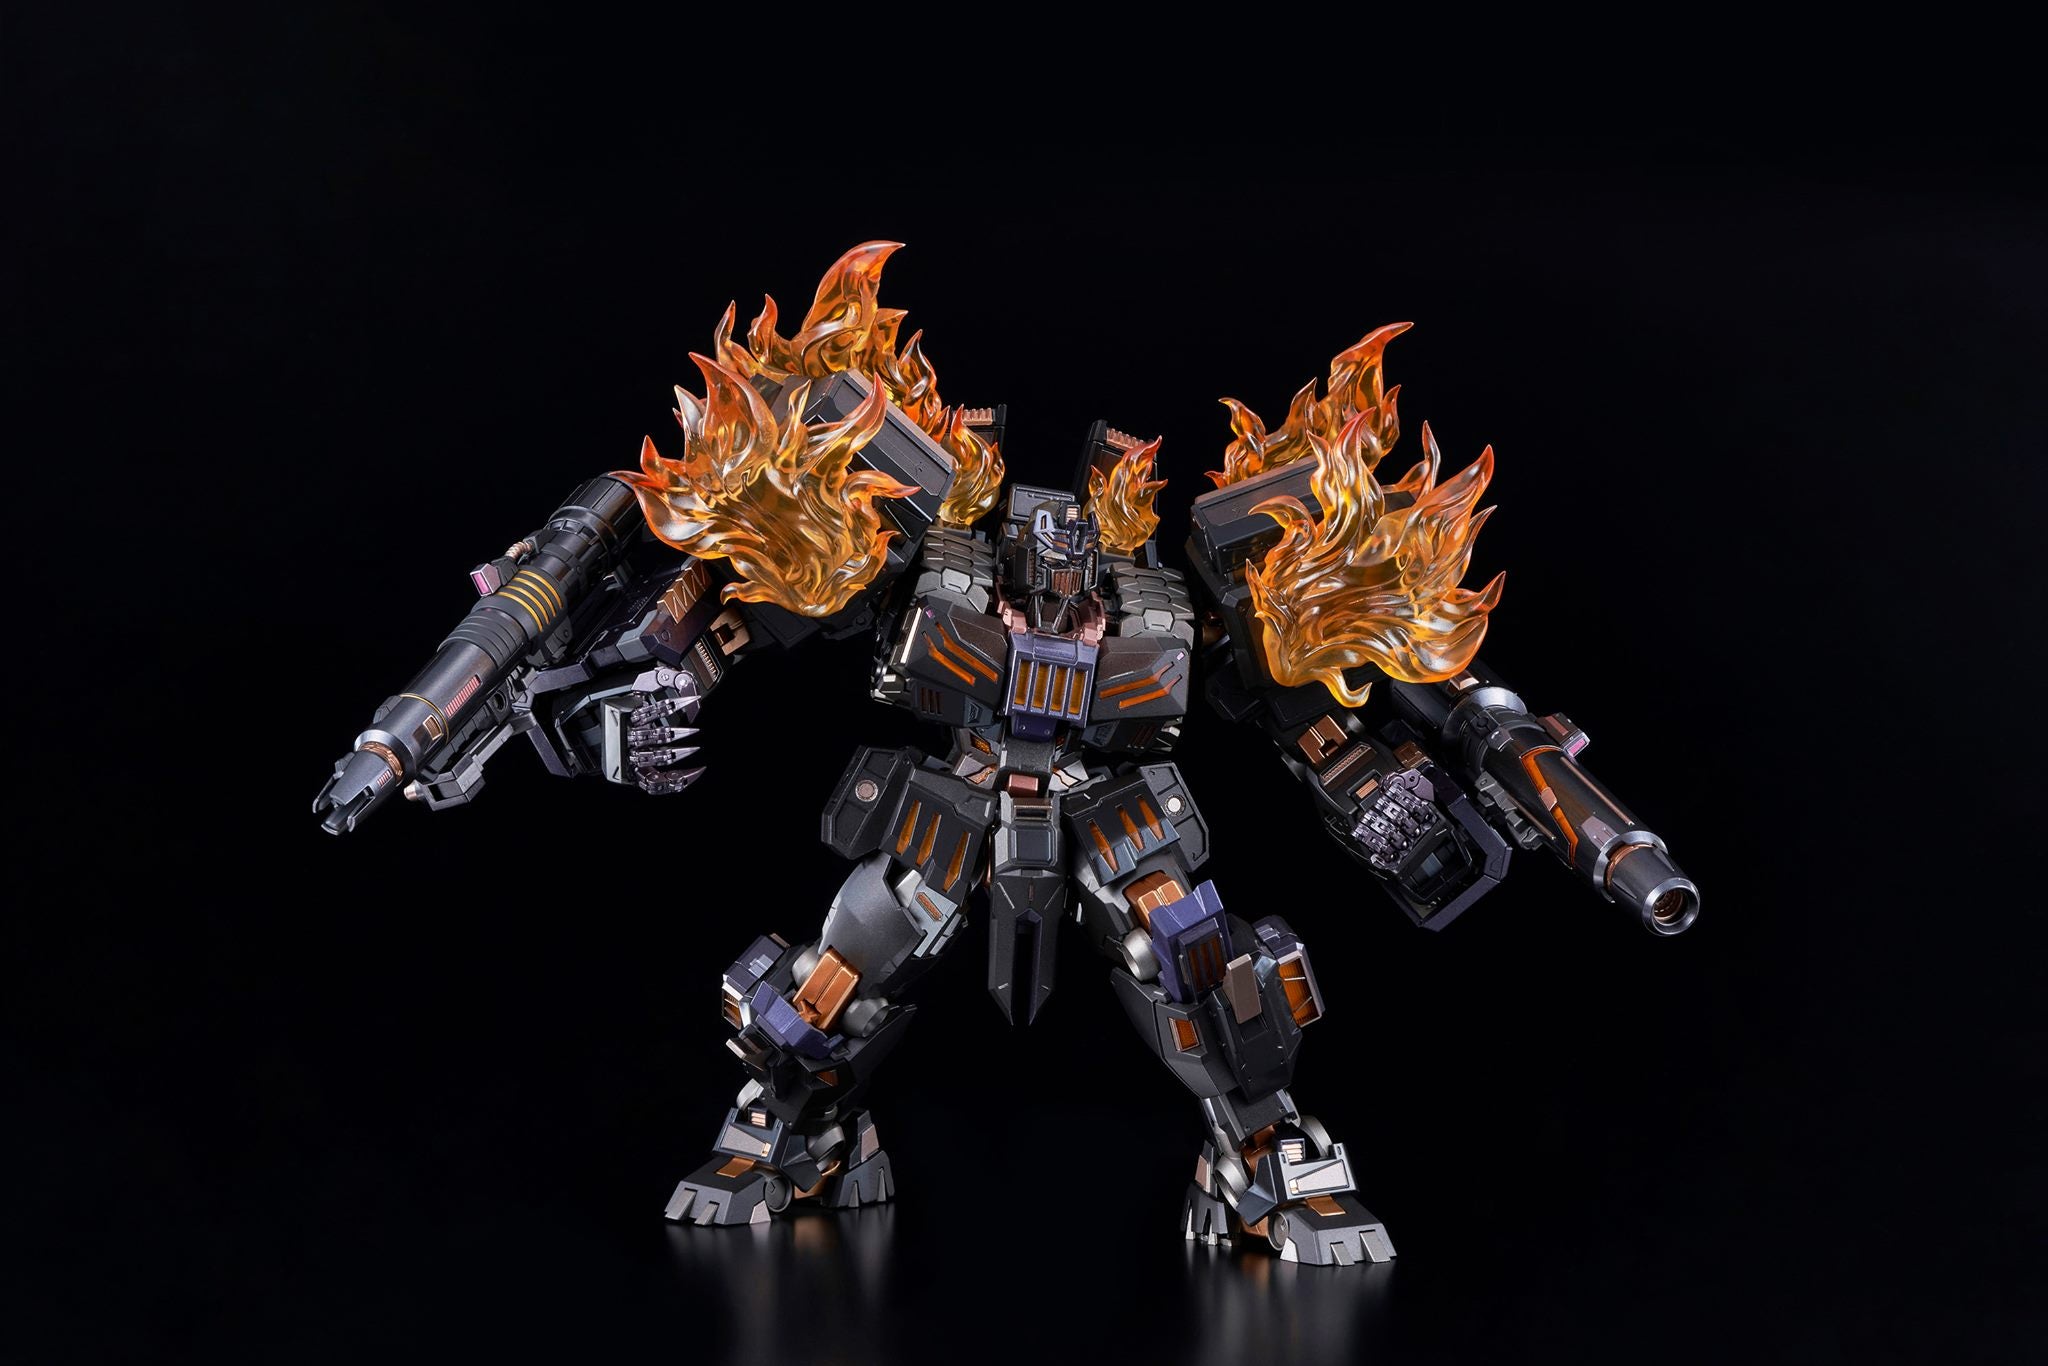 Flame Toys - Transformers - Kuro Kara Kuri 07 - The Fallen (Megatronus Prime)